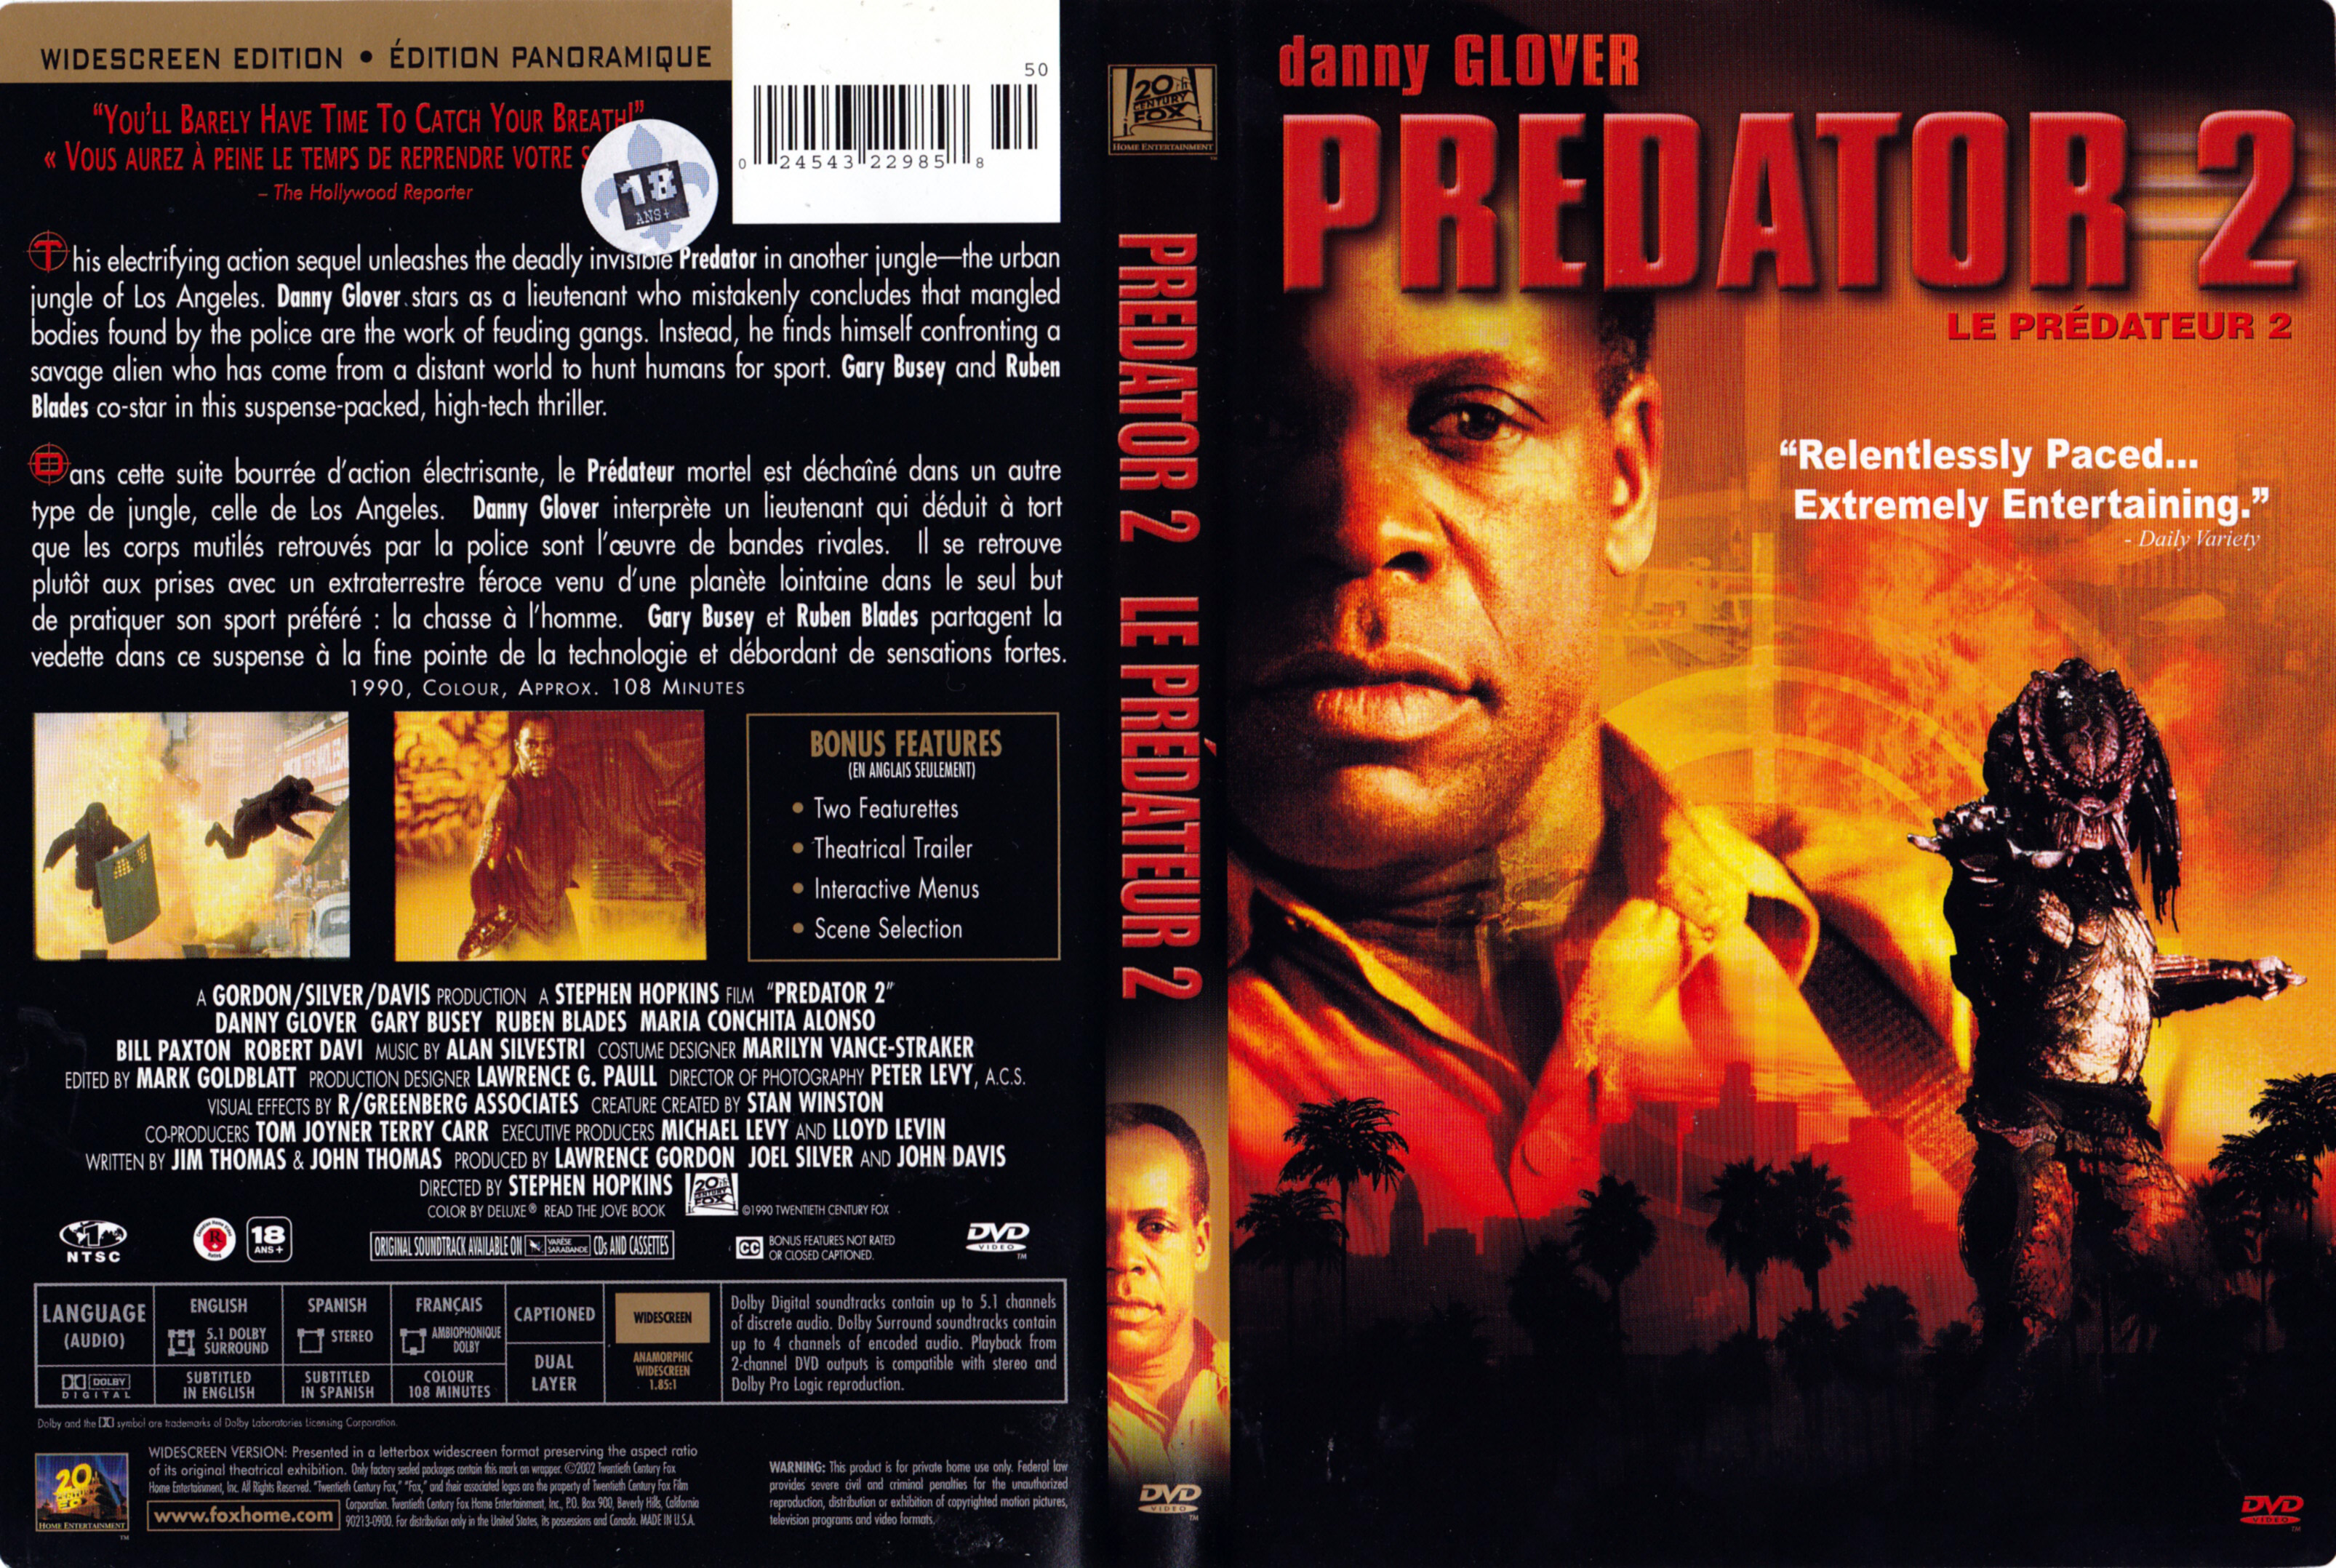 Jaquette DVD Le Predateur 2 - The predator 2 (Canadienne)